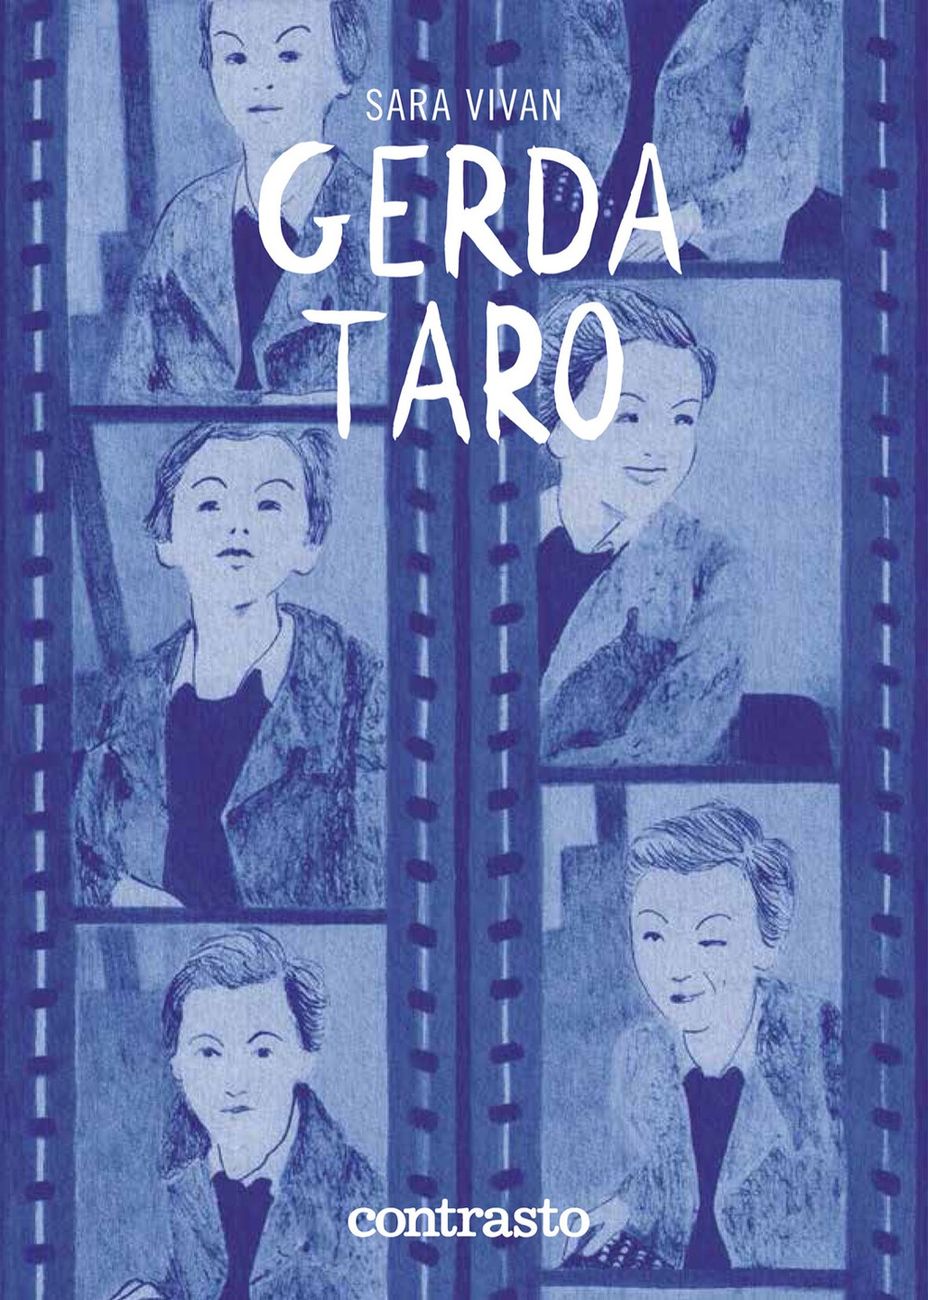 Sara Vivan – Gerda Taro (Contrasto, Milano 2019)